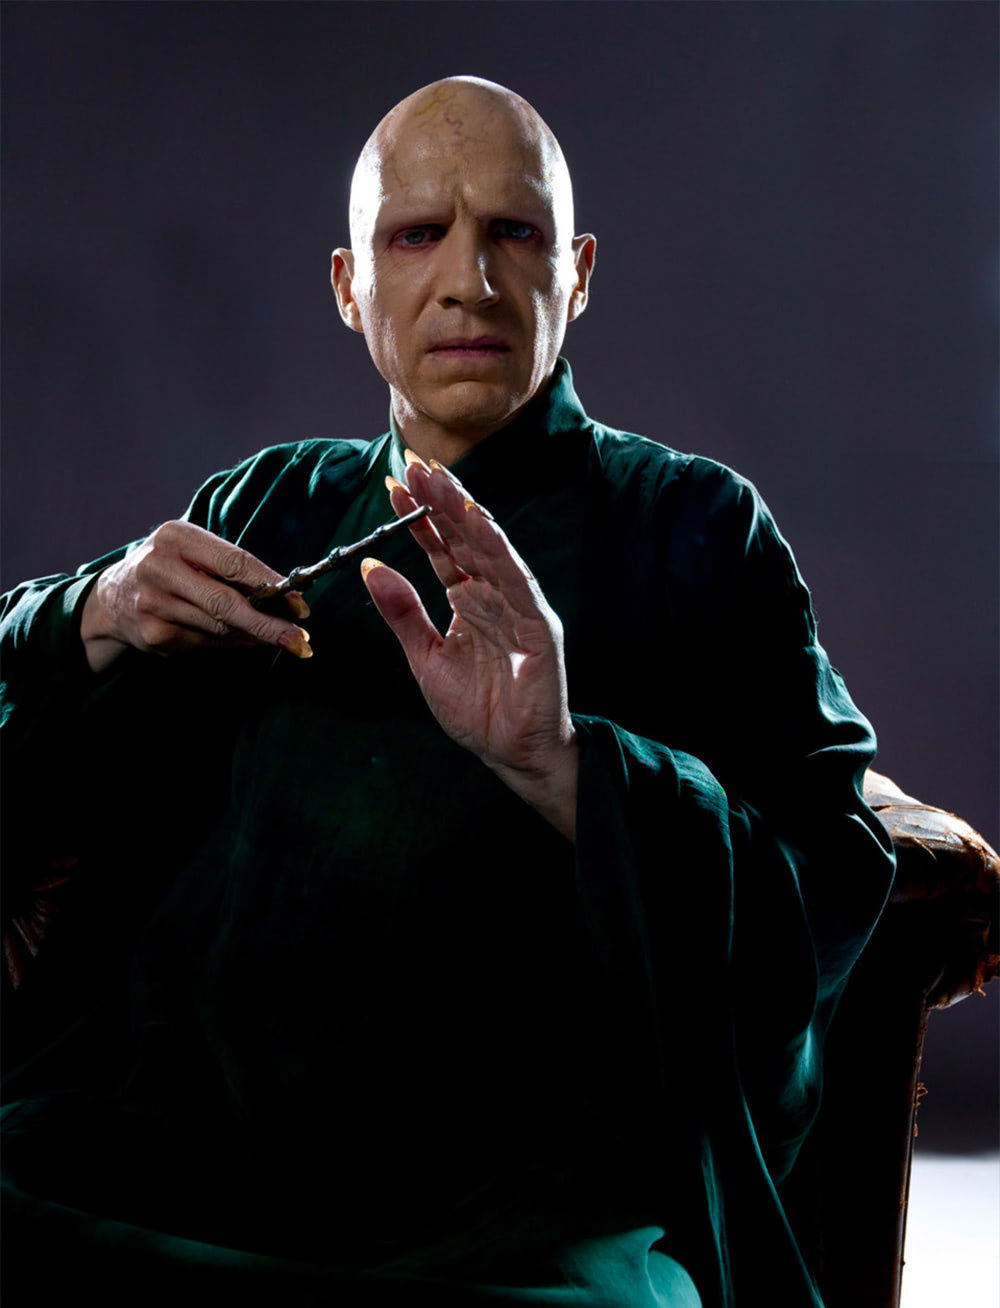 Portrait of Lord Voldemort